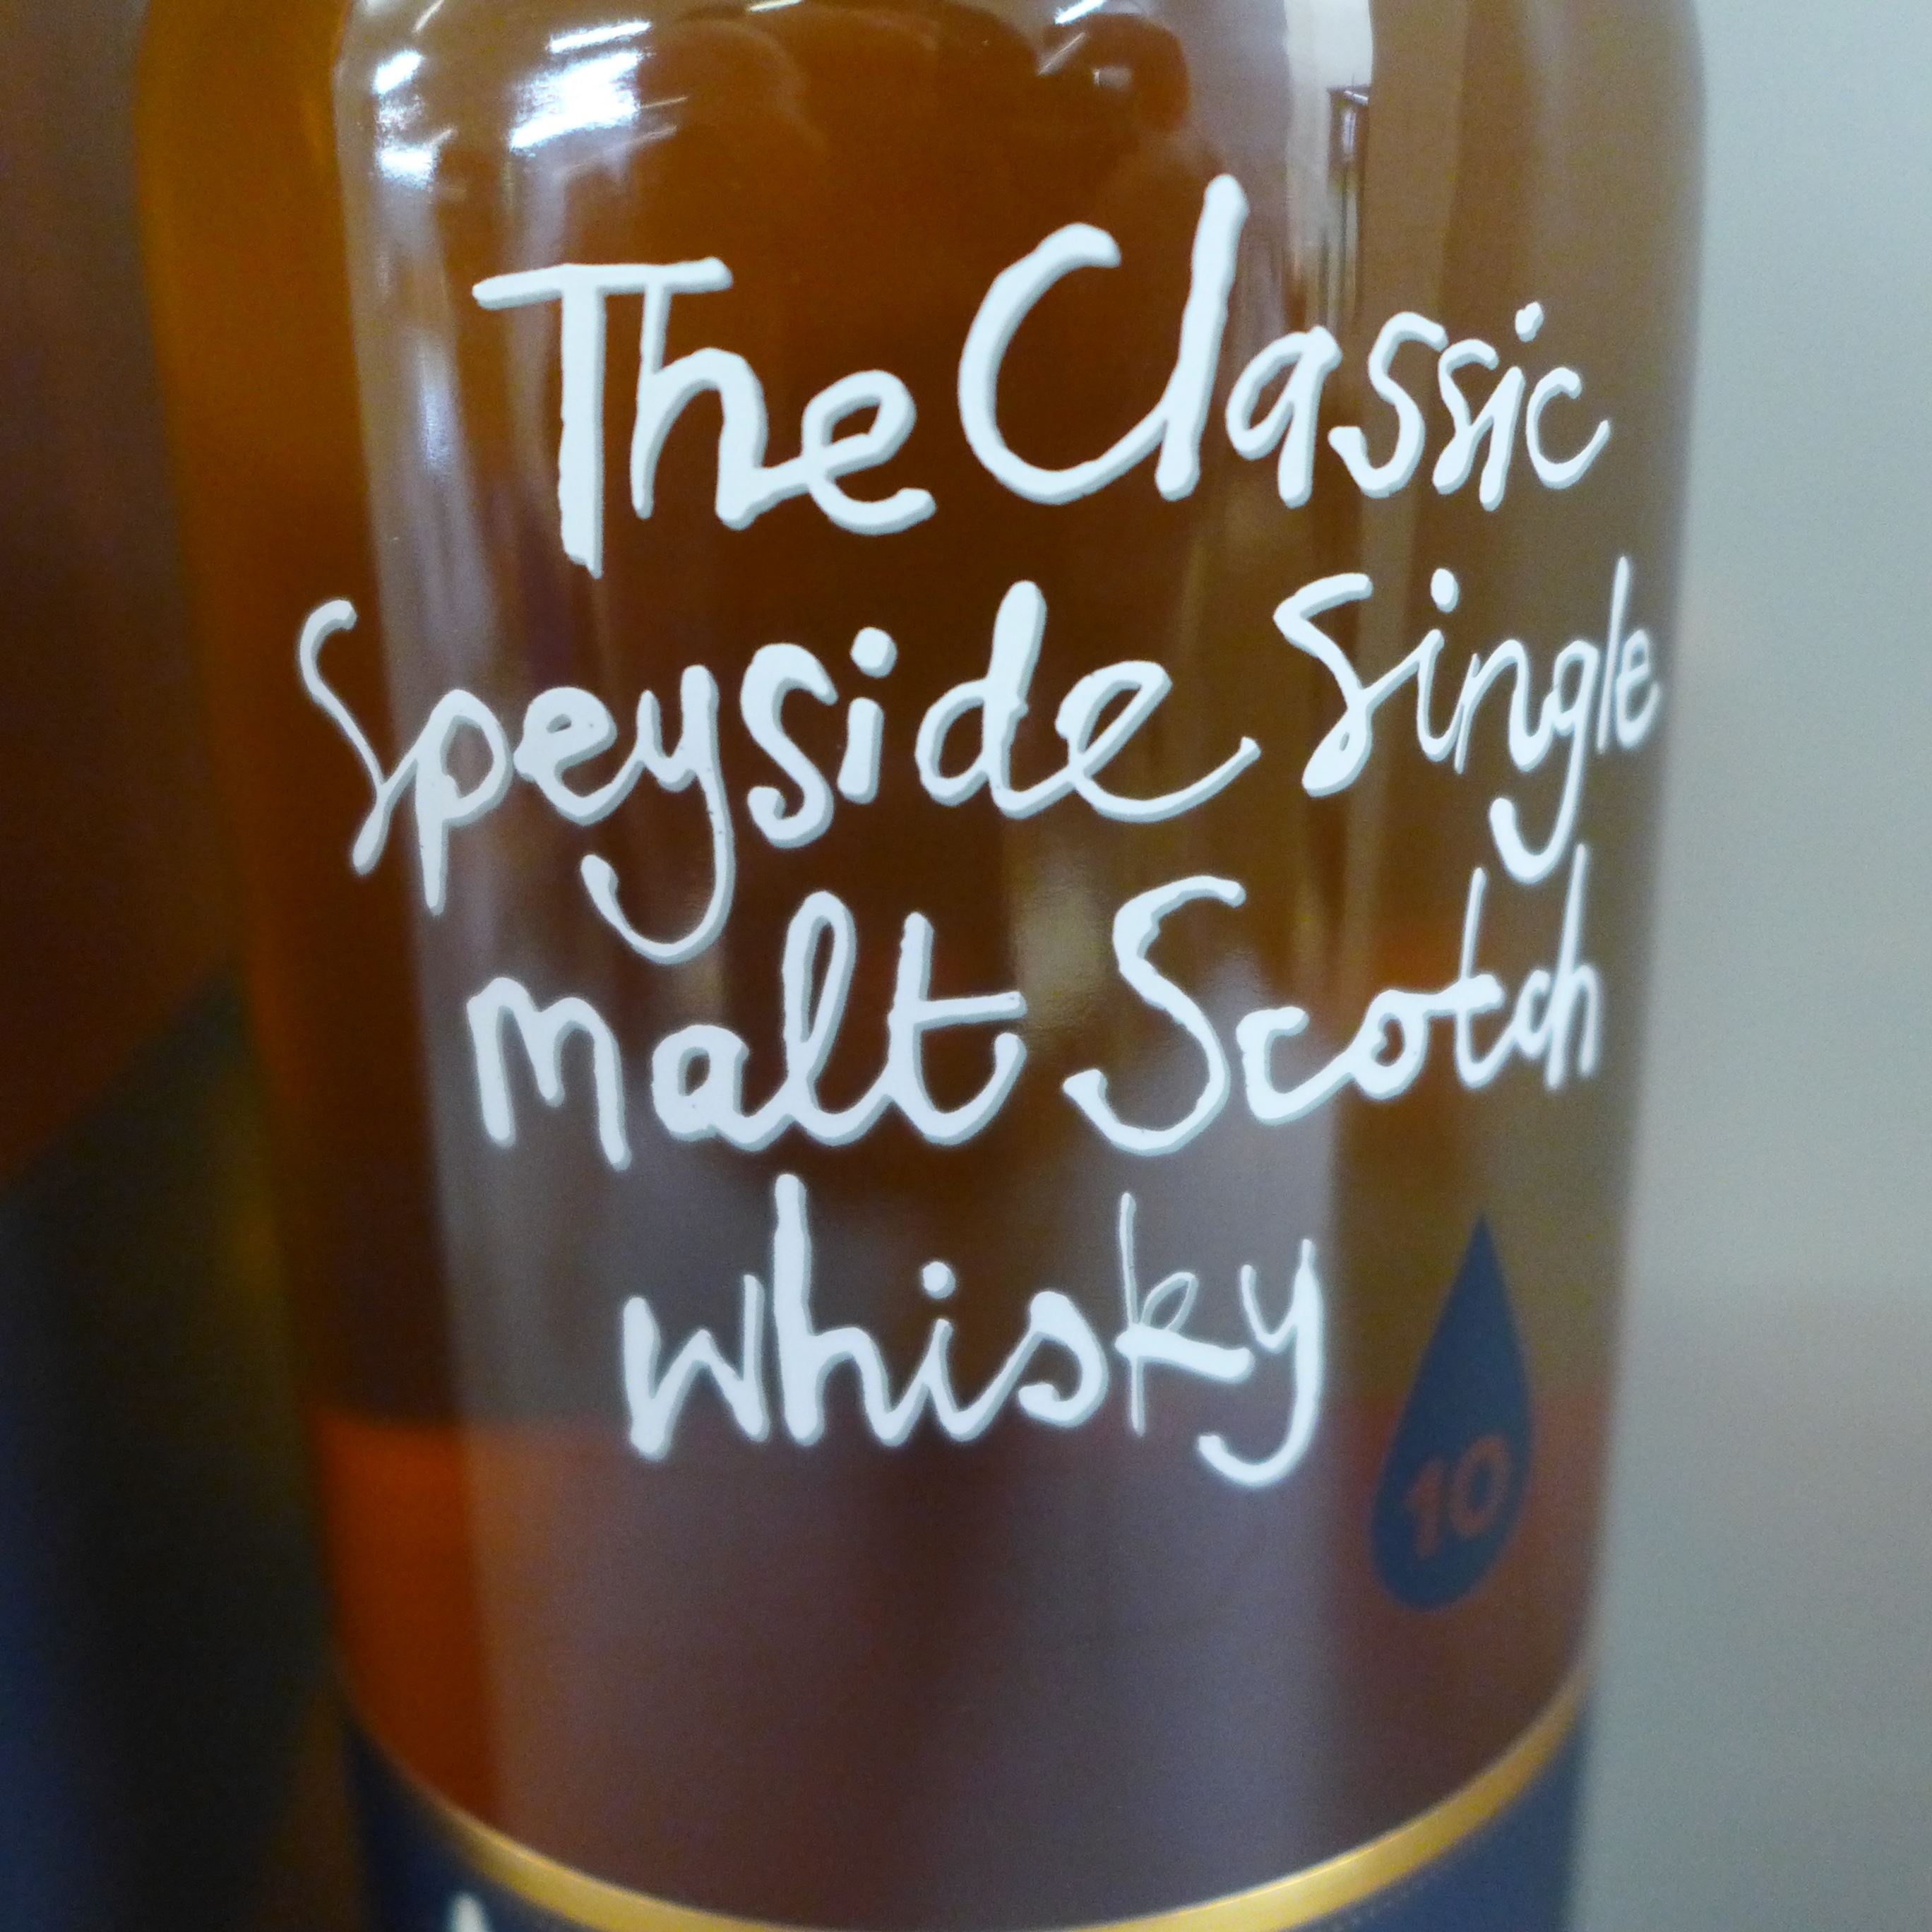 A bottle of Benromach Speyside Single Malt Scotch Whisky, 10 years old, boxed - Bild 3 aus 4